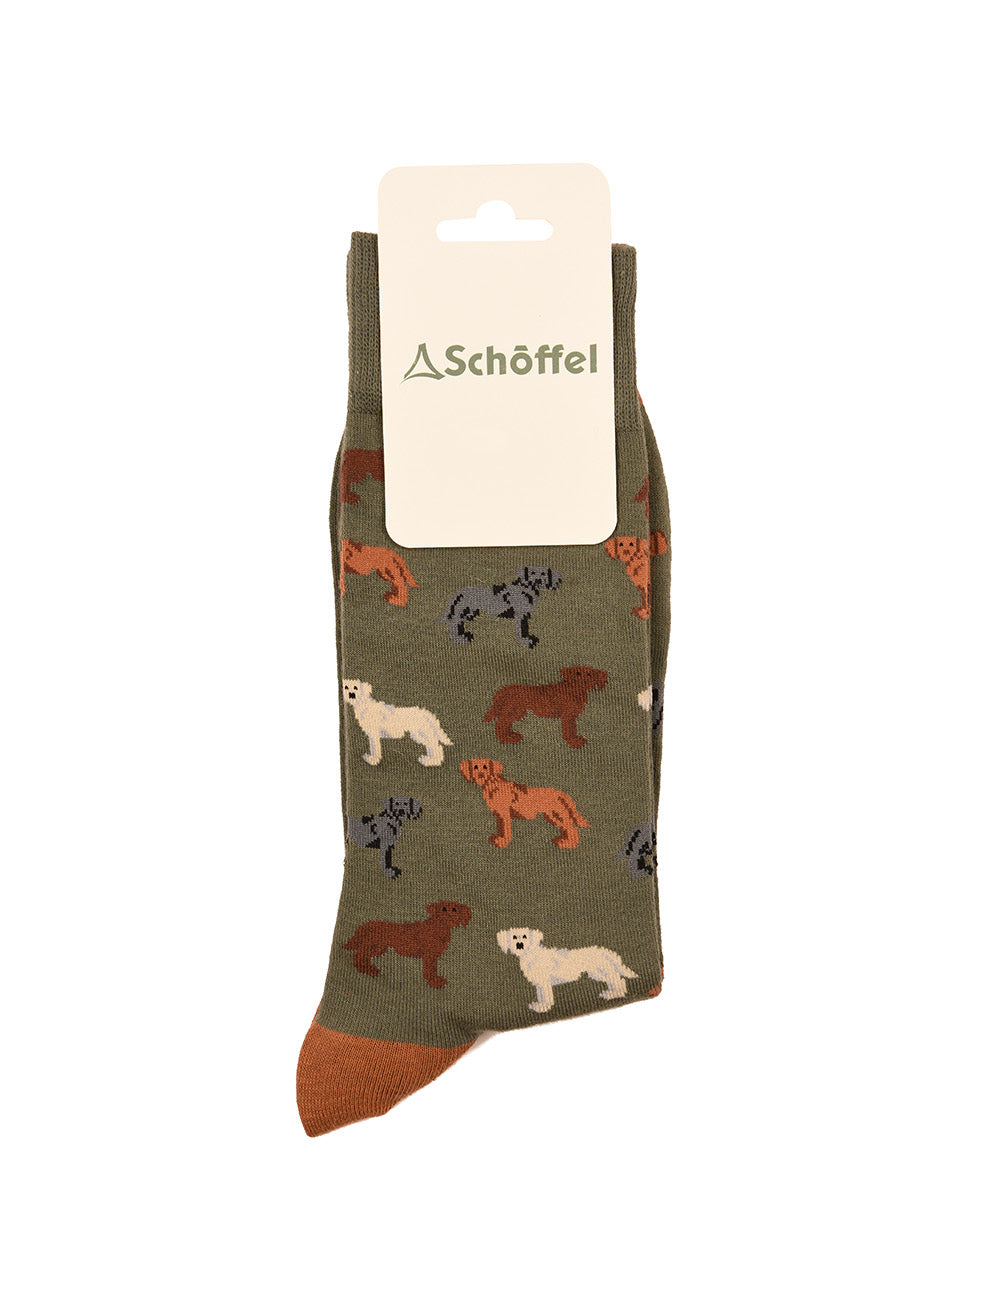 Schoffel Cotton Socks - Olive Labrador